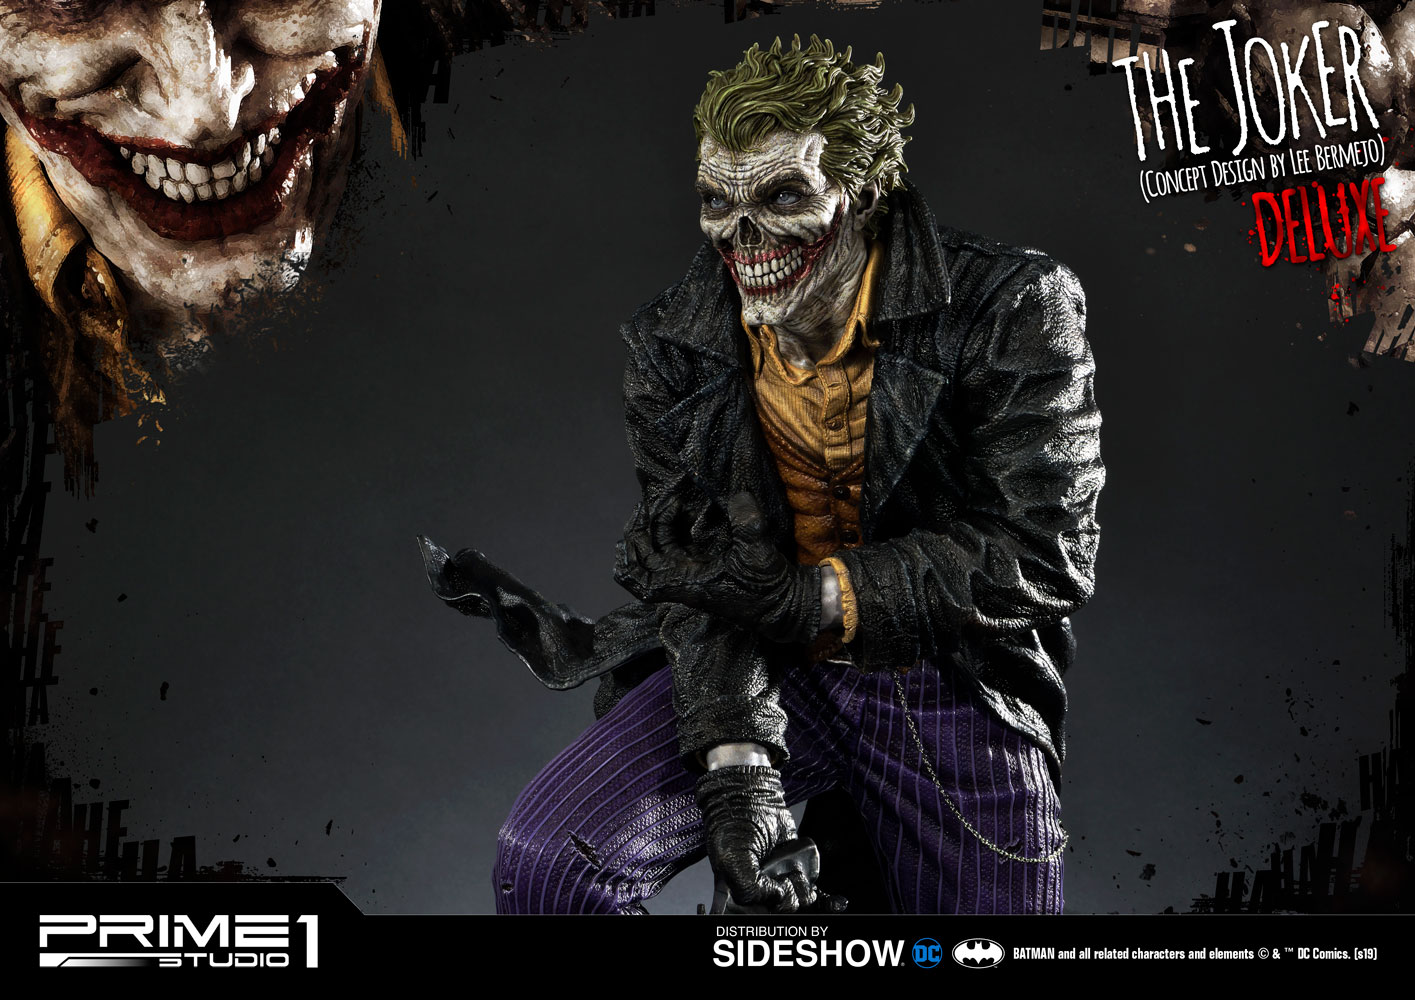 The Joker Deluxe Version (Concept Design by Lee Bermejo) (Prototype Shown) View 7